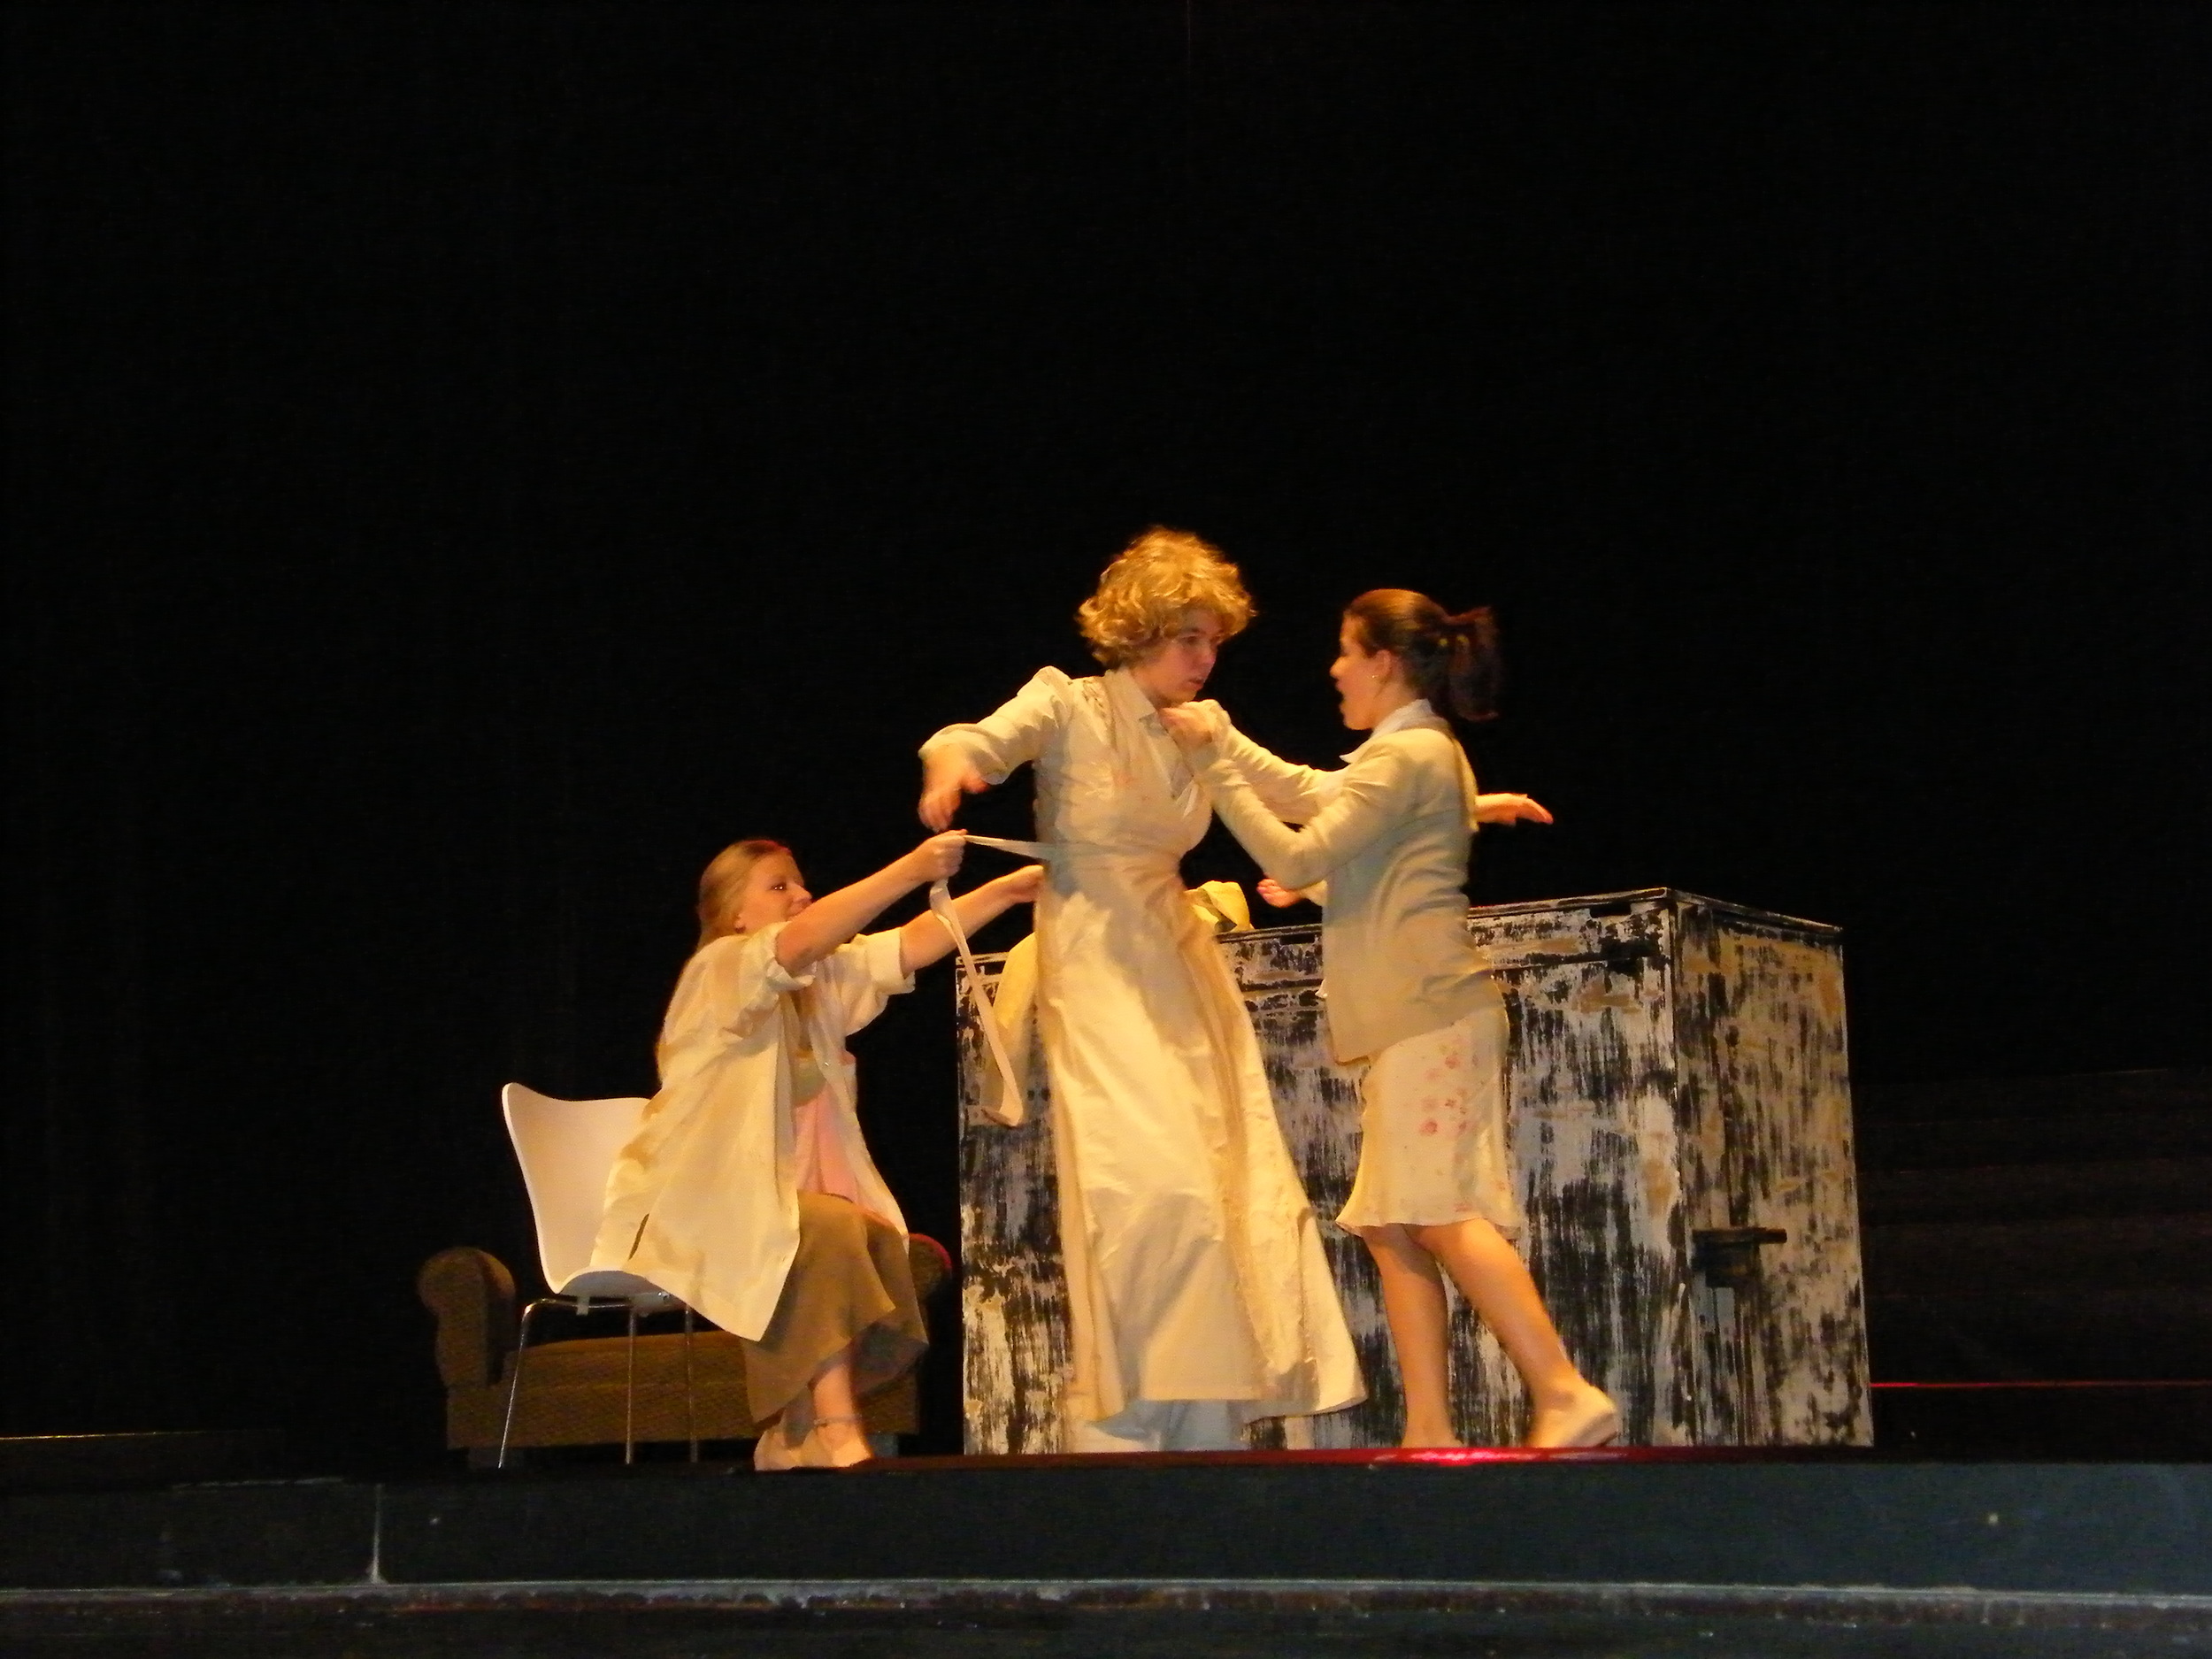 Dress rehearsel 'Le nozze di Figaro' - Susanna (Elsi Spanoghe),  The Countess Almaviva (Karlijn Noten) en Cherubino (Trees Beckwé) (November 2015)